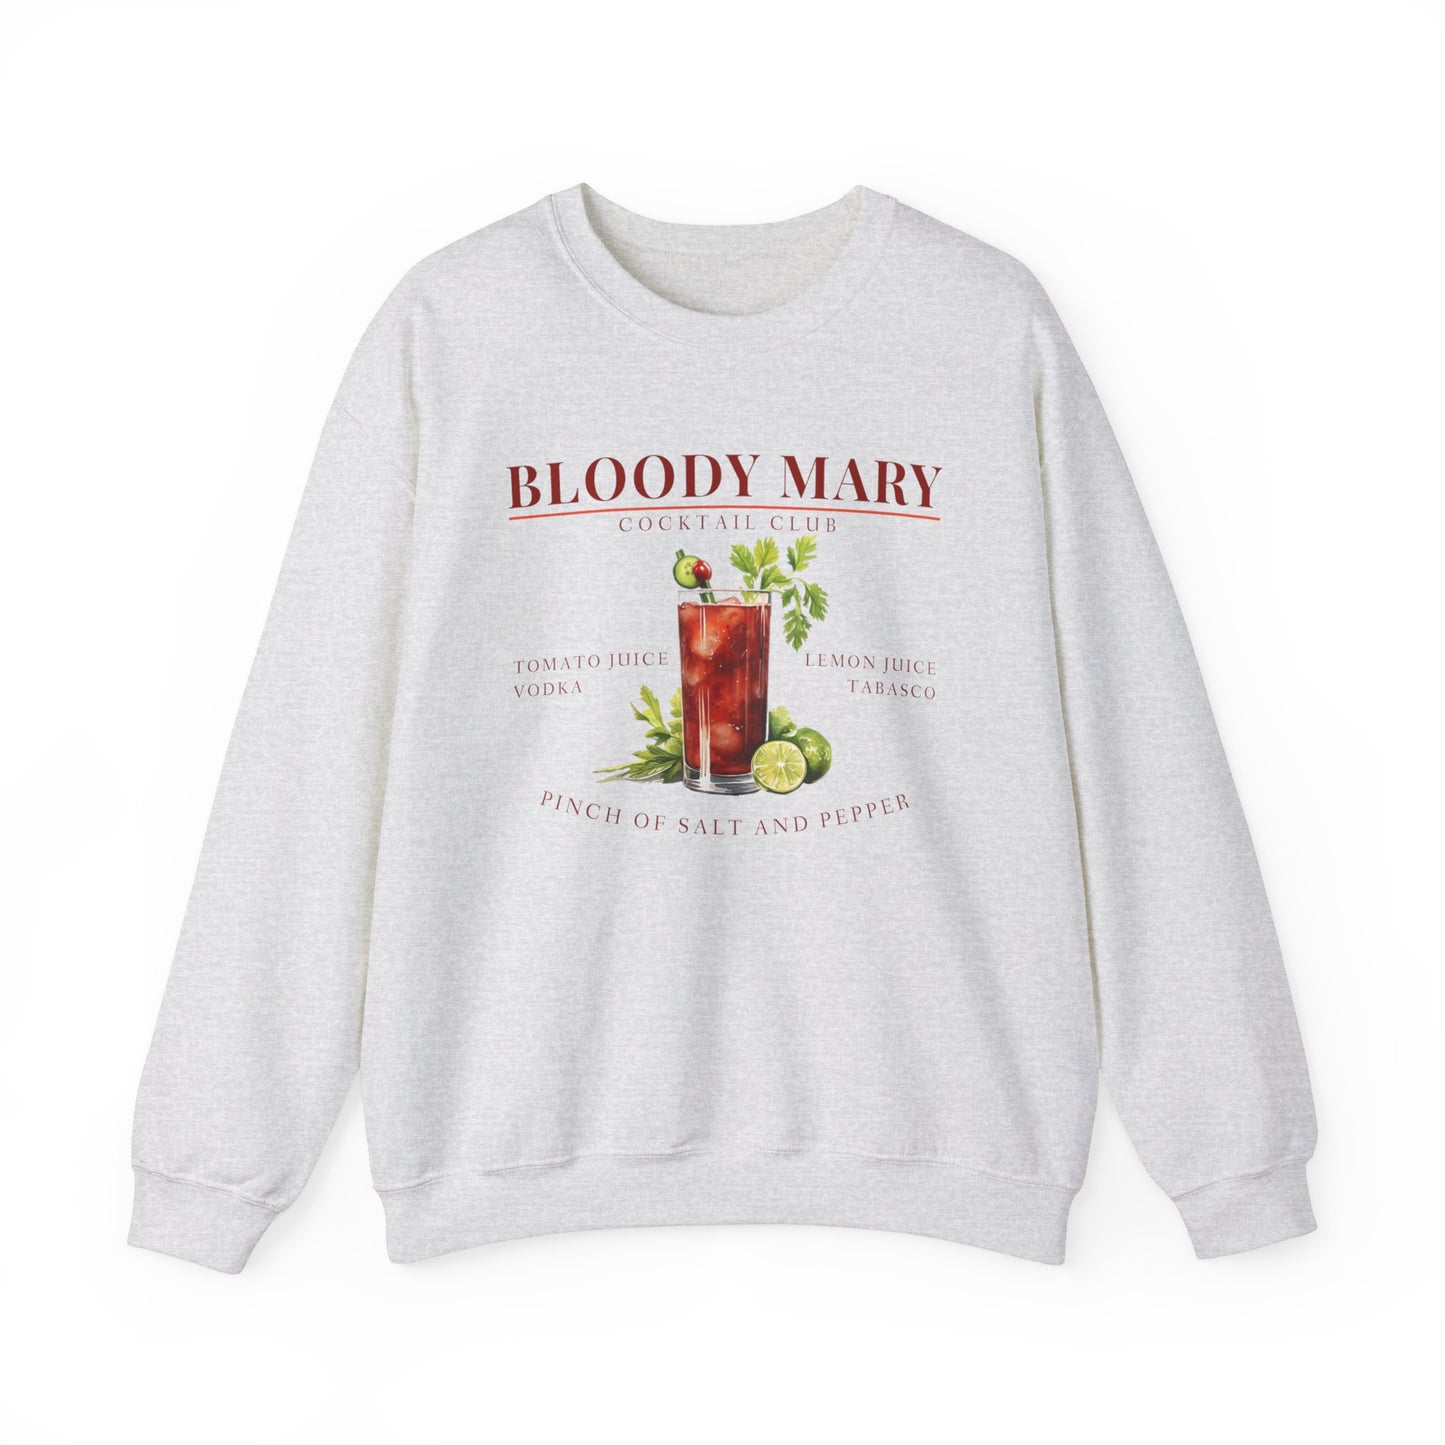 Bloody Mary Cocktail Club Sweatshirt